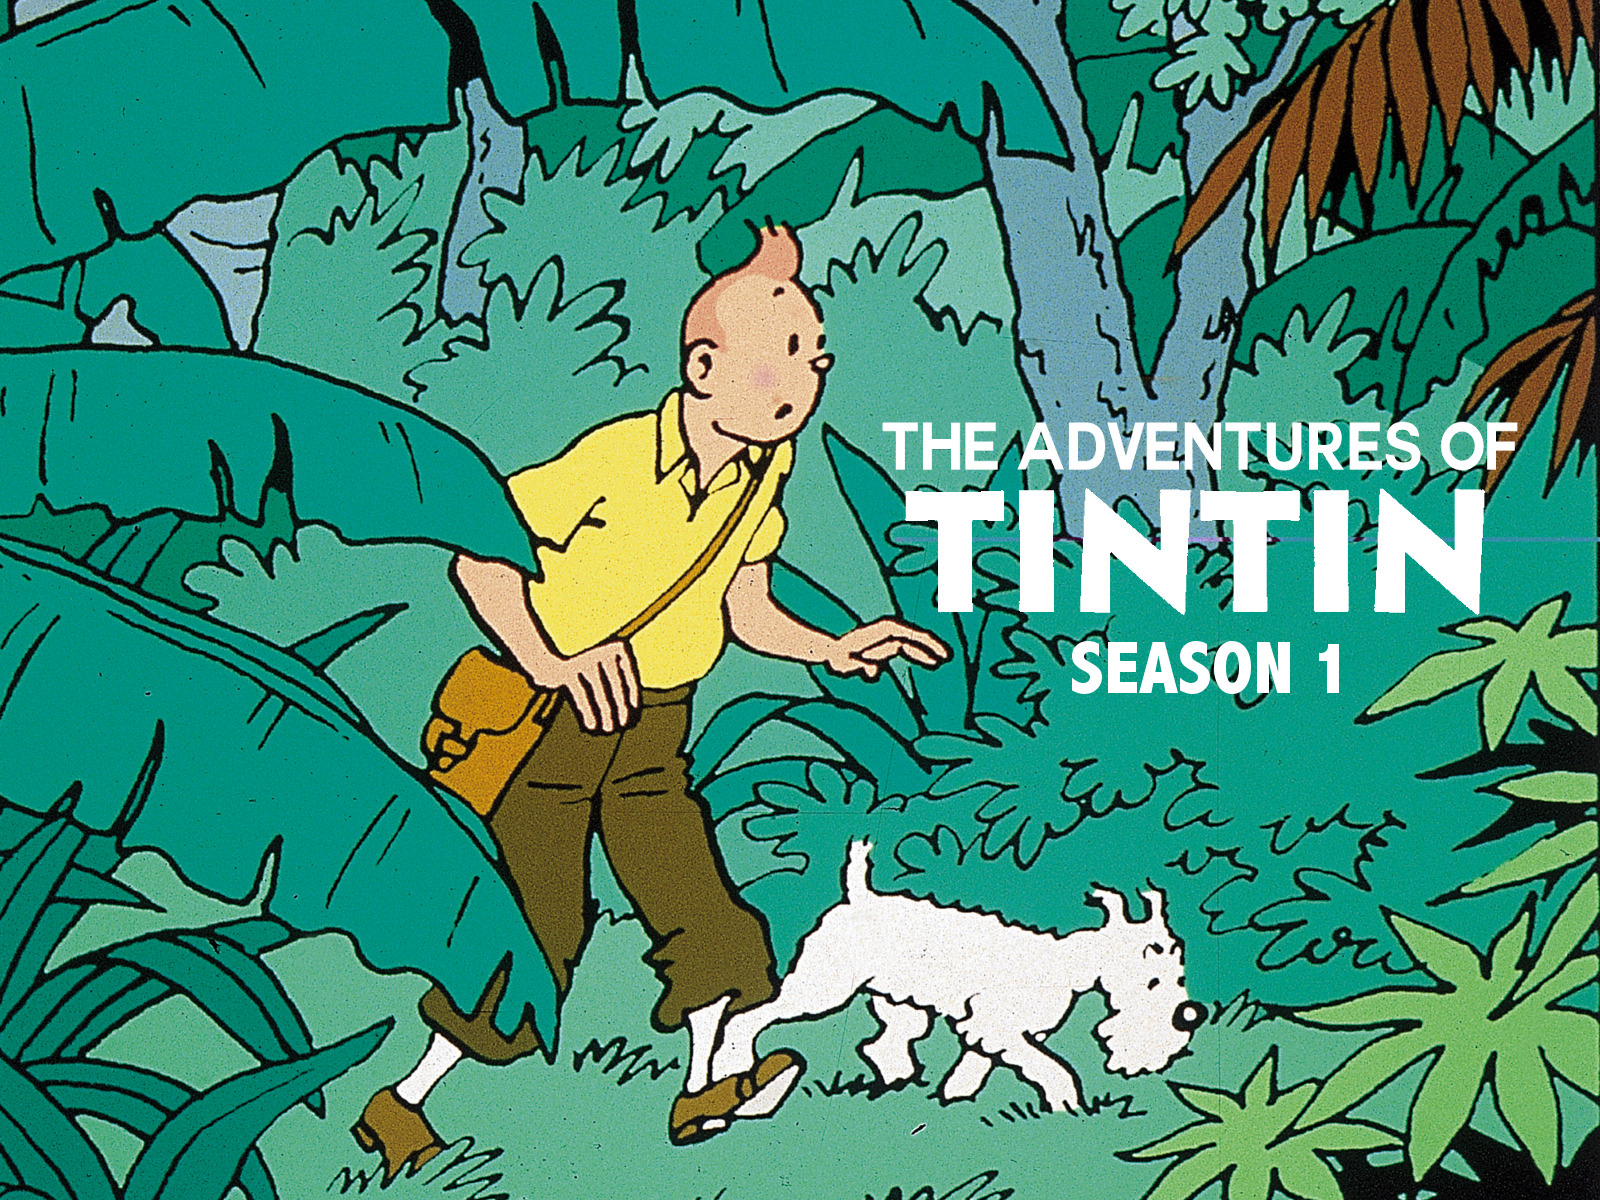 The Adventures of Tintin (Season 1) / The Adventures of Tintin (Season 1) (1991)